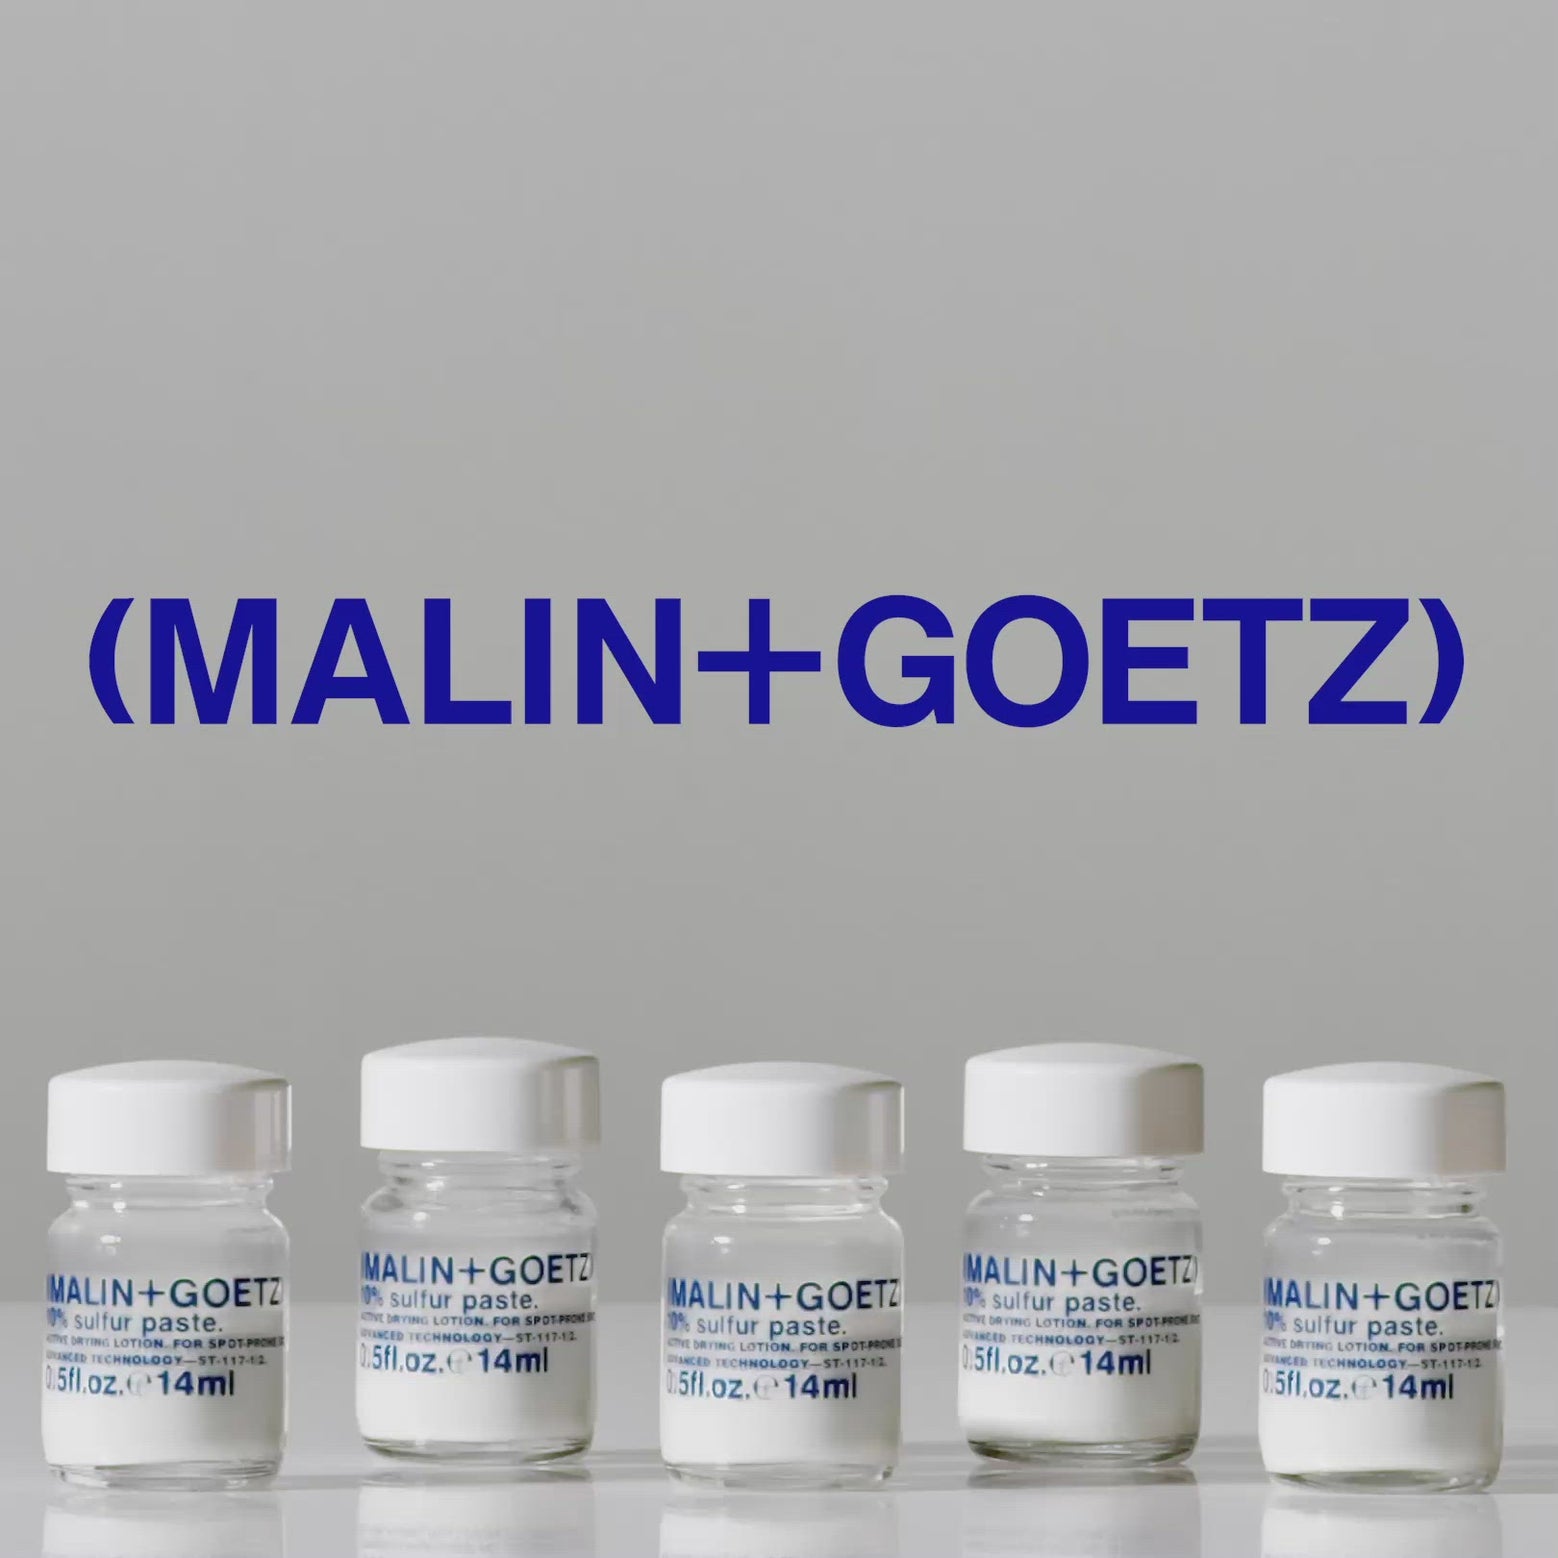 Malin + Goetz - Overnight 10% Sulfur Paste with Salicylic Acid & Active Sulfur to Combat Acne & Scarring